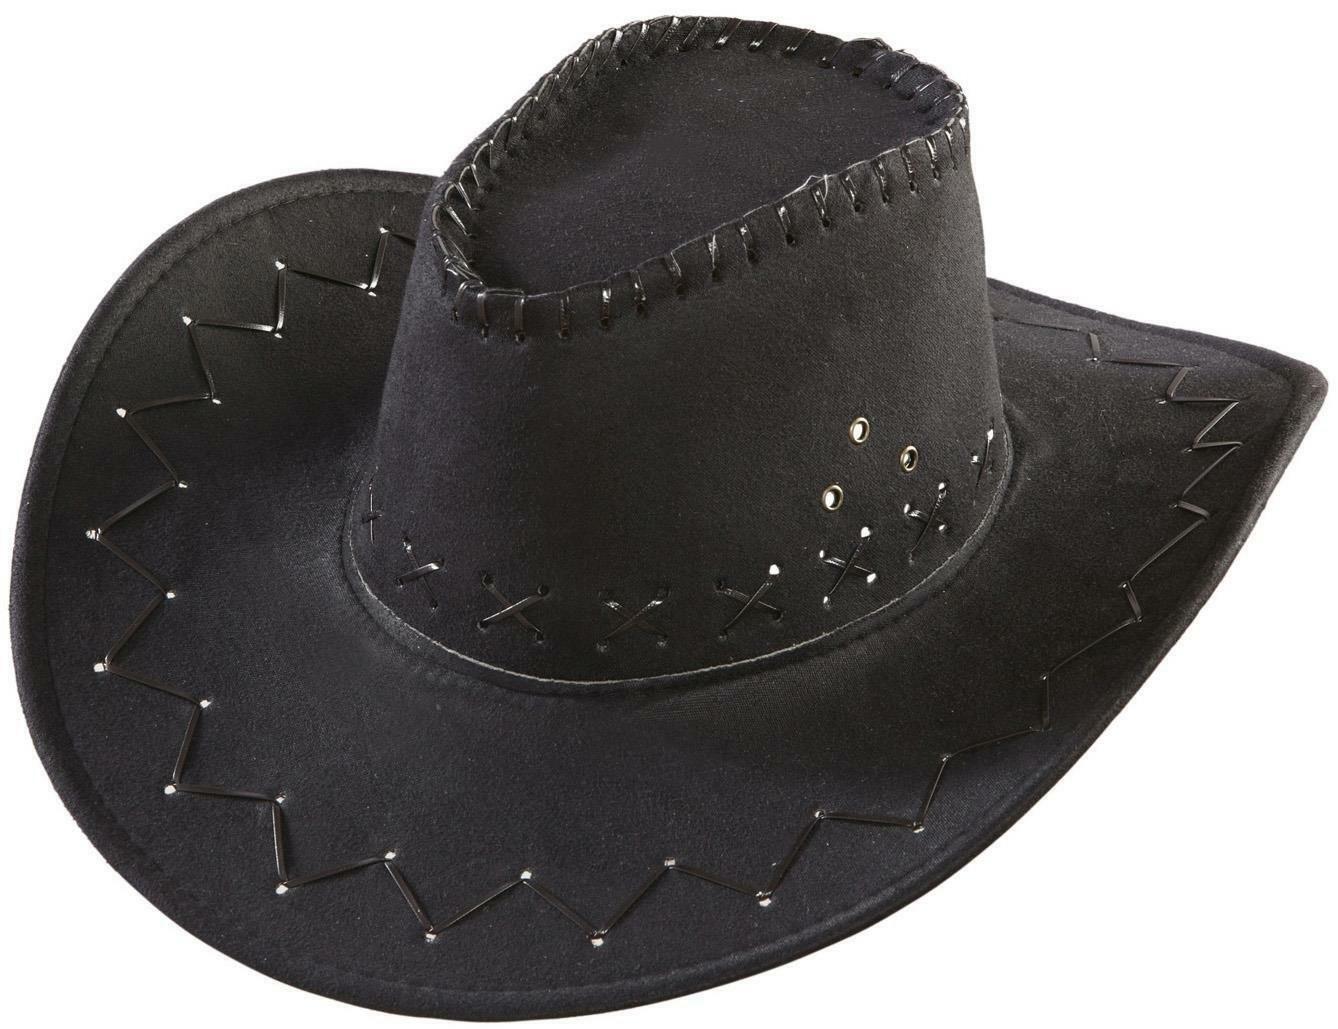 widmann cappello da cowboy nero scamosciato